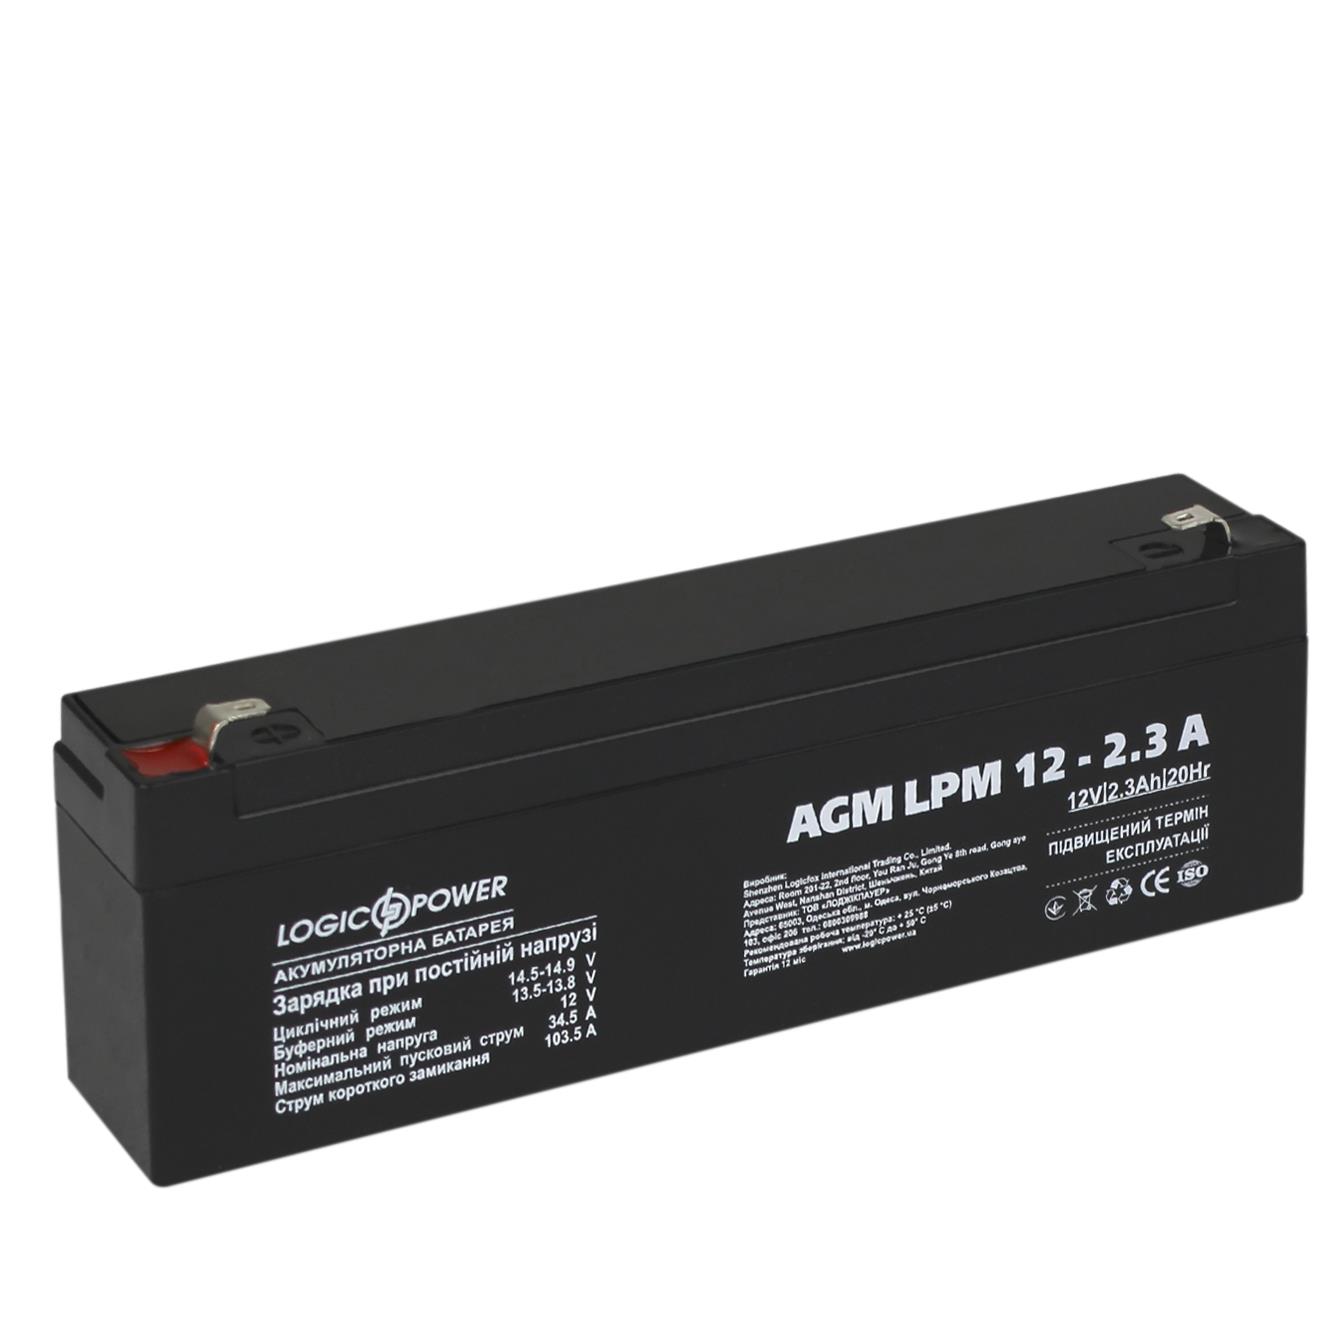 Аккумулятор свинцово-кислотный LogicPower AGM LPM 12V - 2.3 Ah (4132) цена 430.00 грн - фотография 2